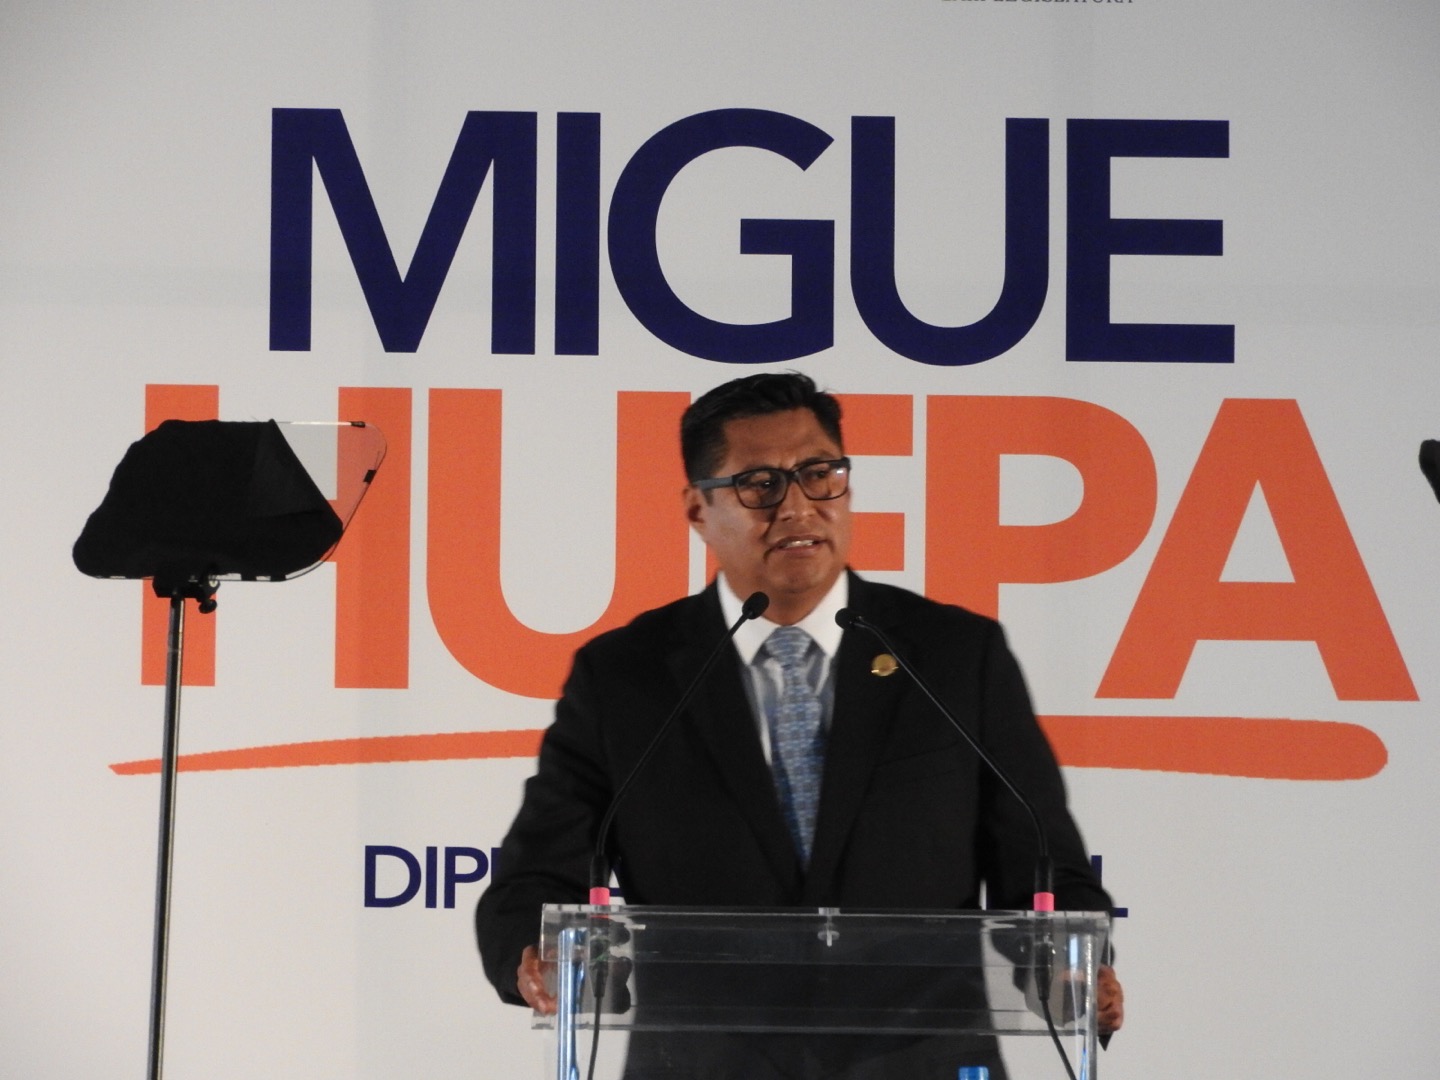 Huepa candidatea a Martha Erika para gubernatura de Puebla